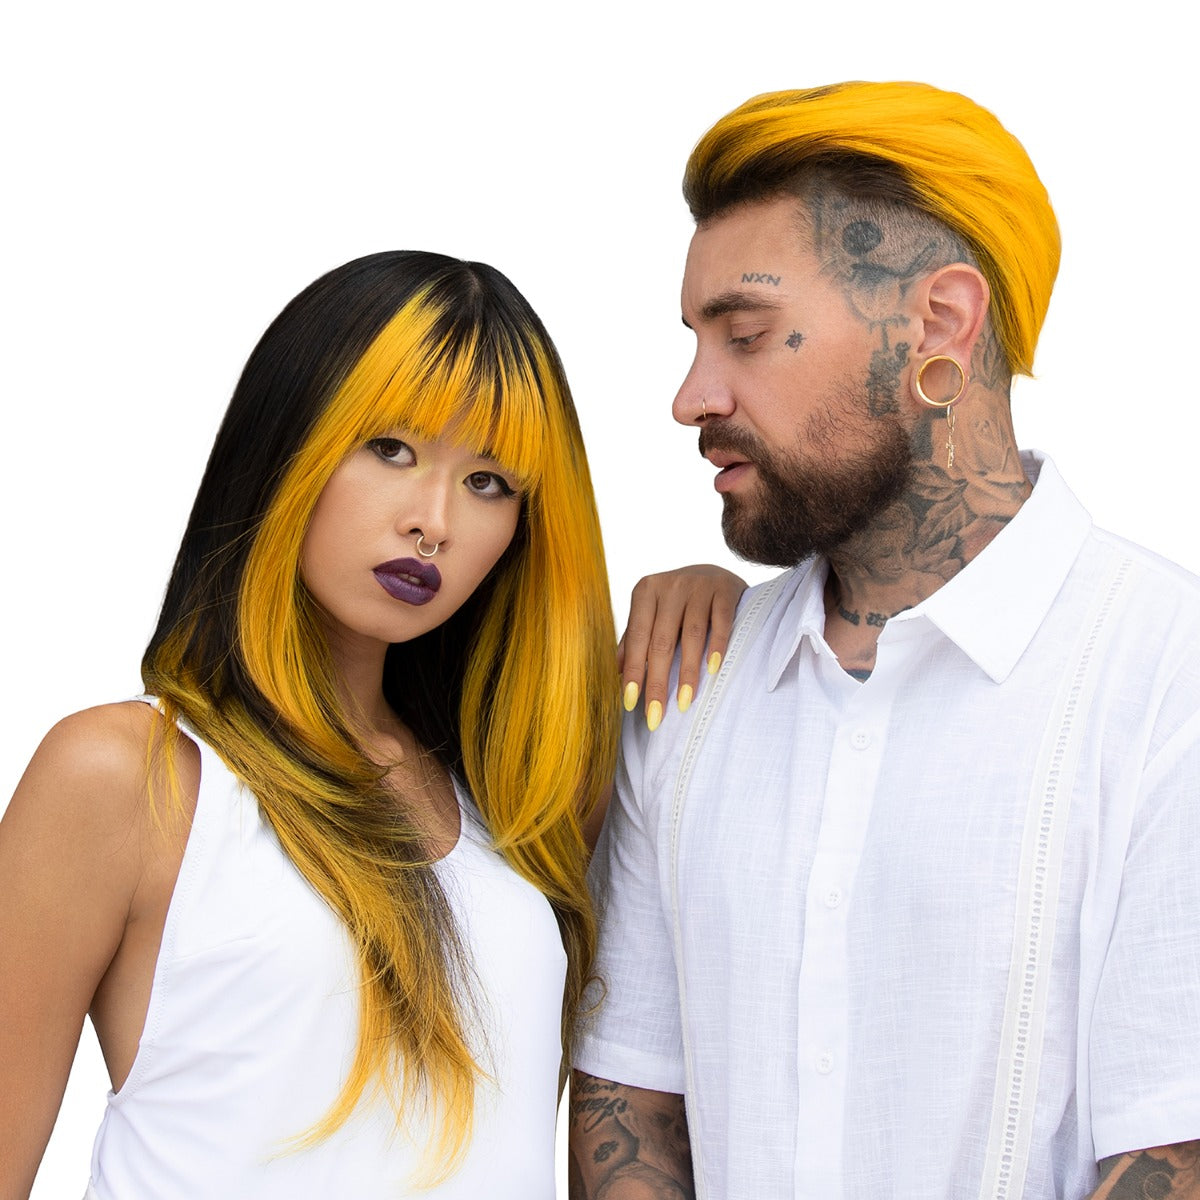 Splat Hair Dye Yellow Original Complete Kit with Bleach and Semi-Permanent Hair Color – Lemon Drop Yellow Hair Dye Summer Hair color